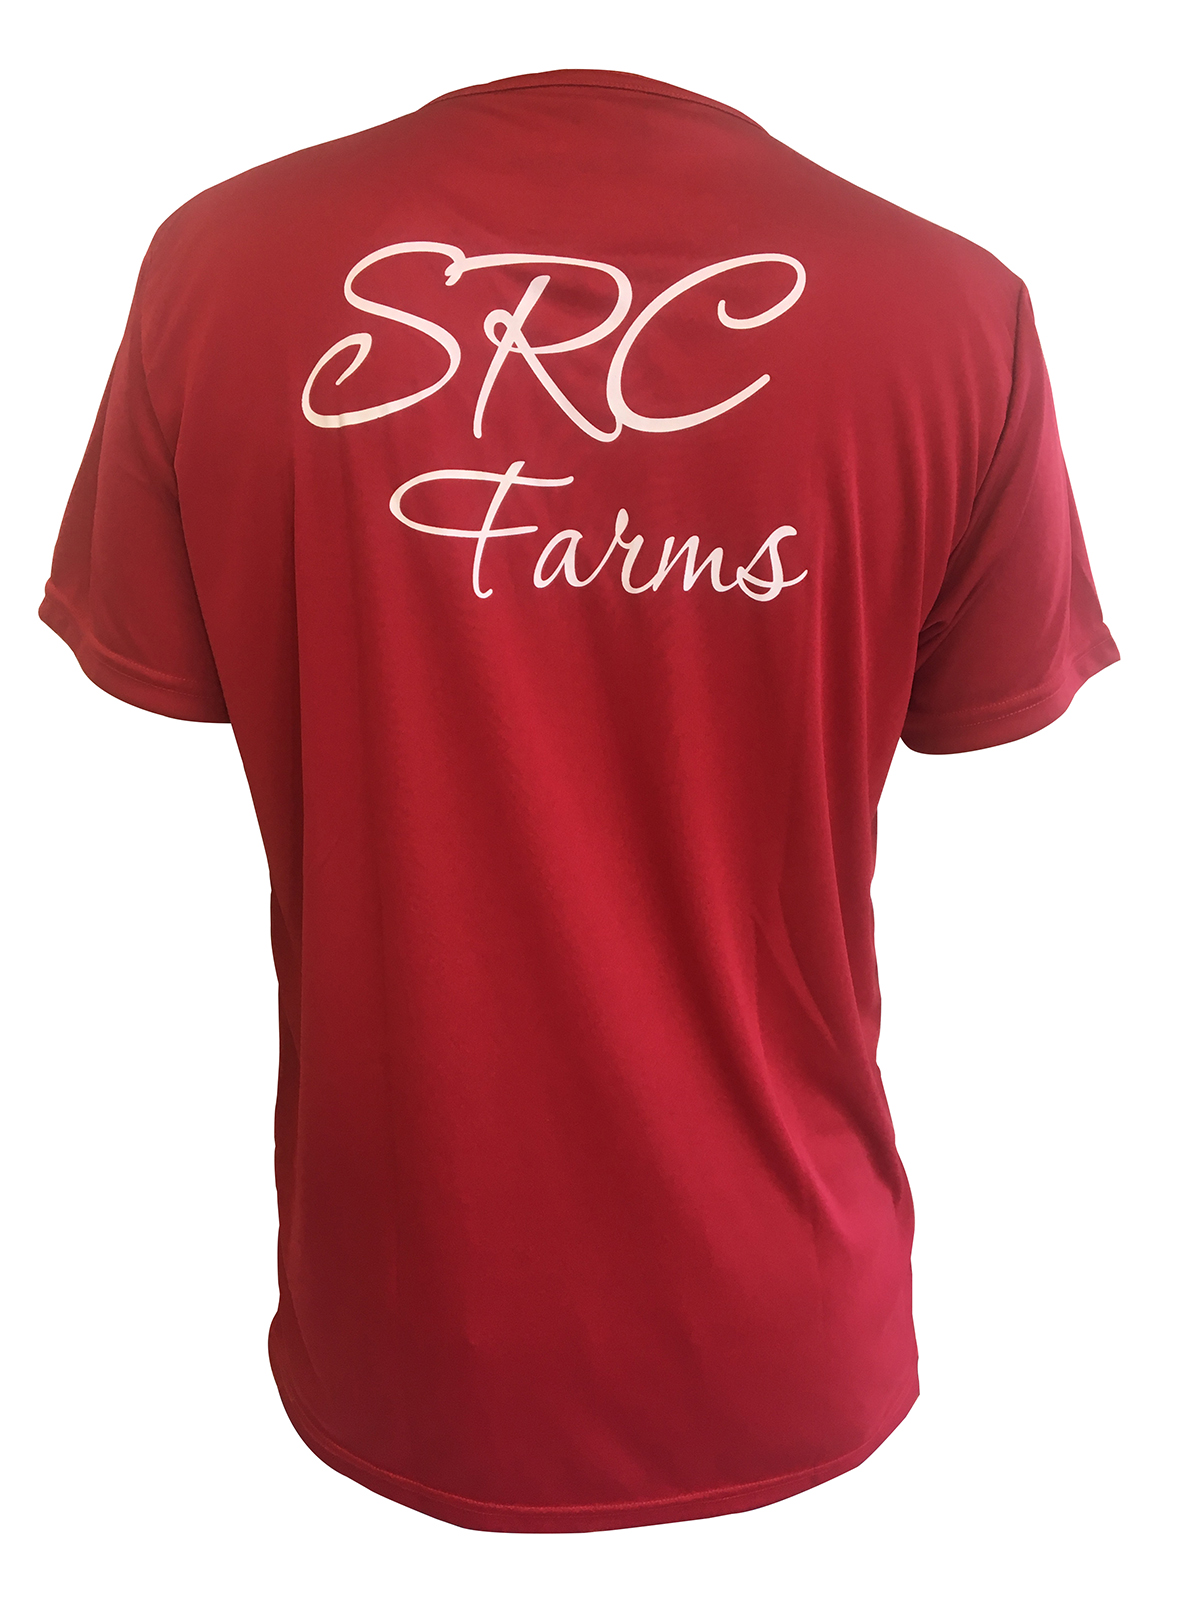 Camiseta SRC Farms